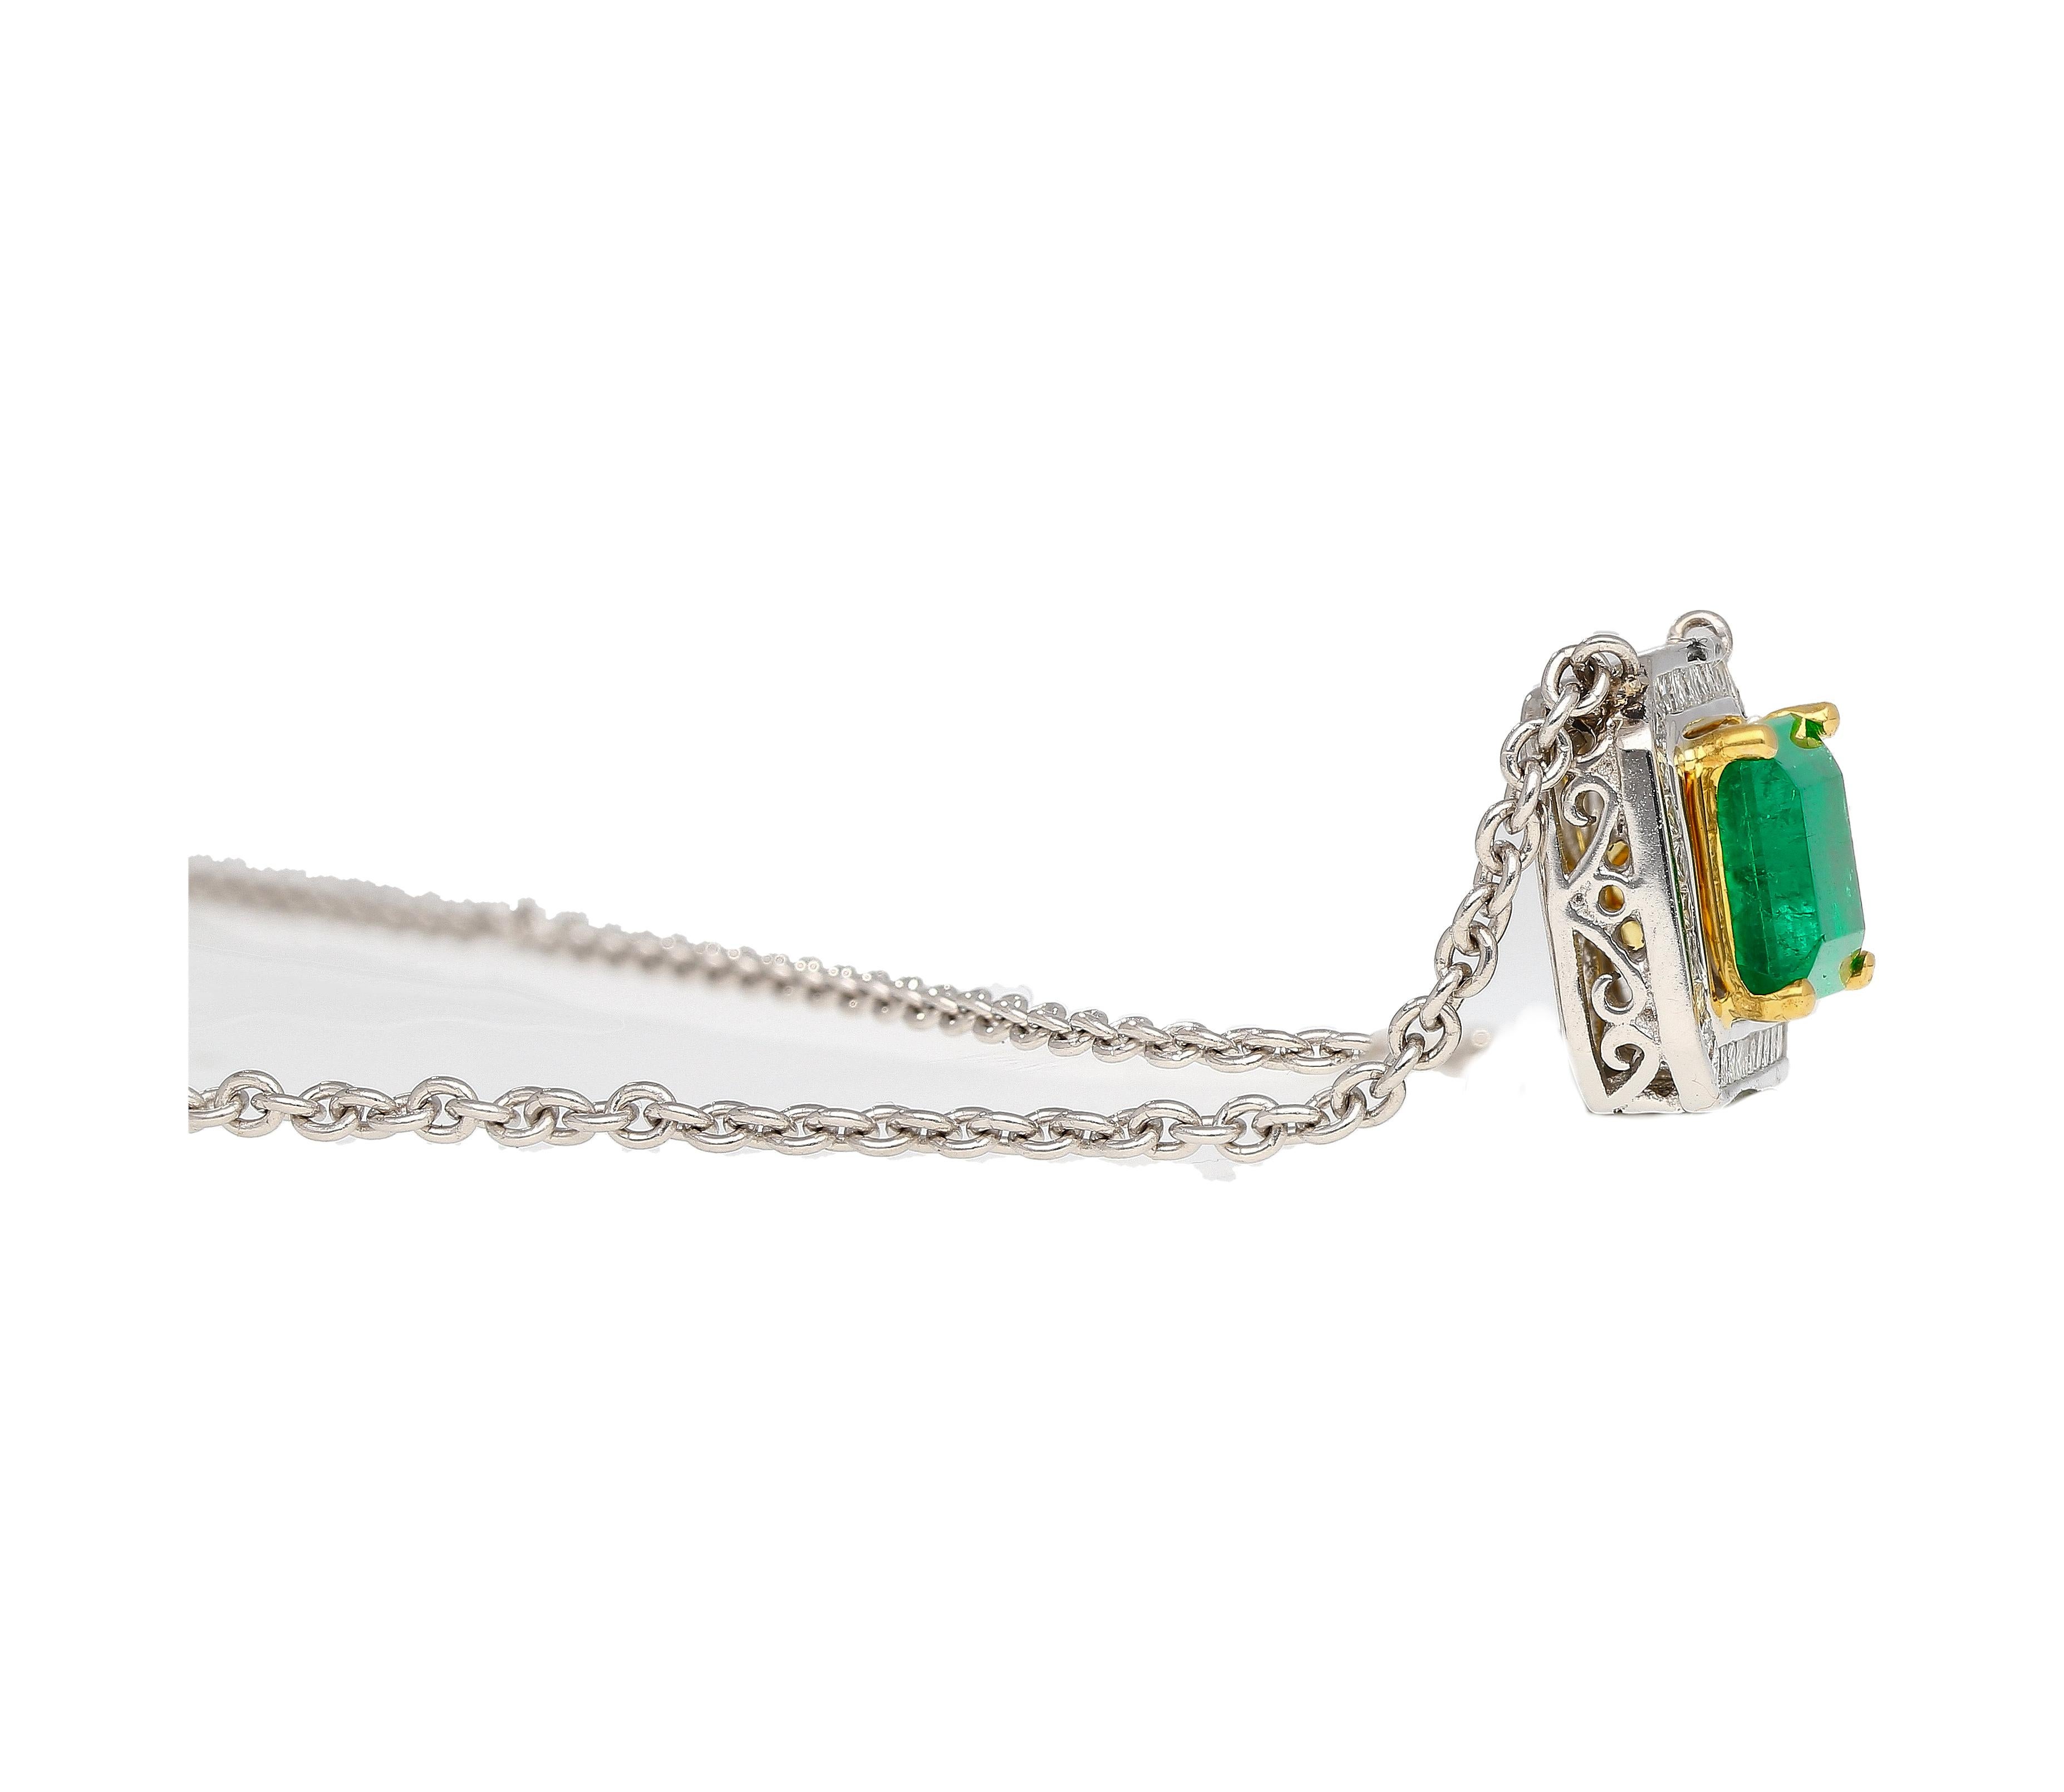 Emerald Cut 2.66 Carat Vivid Green Minor Oil Muzo Mine Colombian Emerald Floating Necklace For Sale